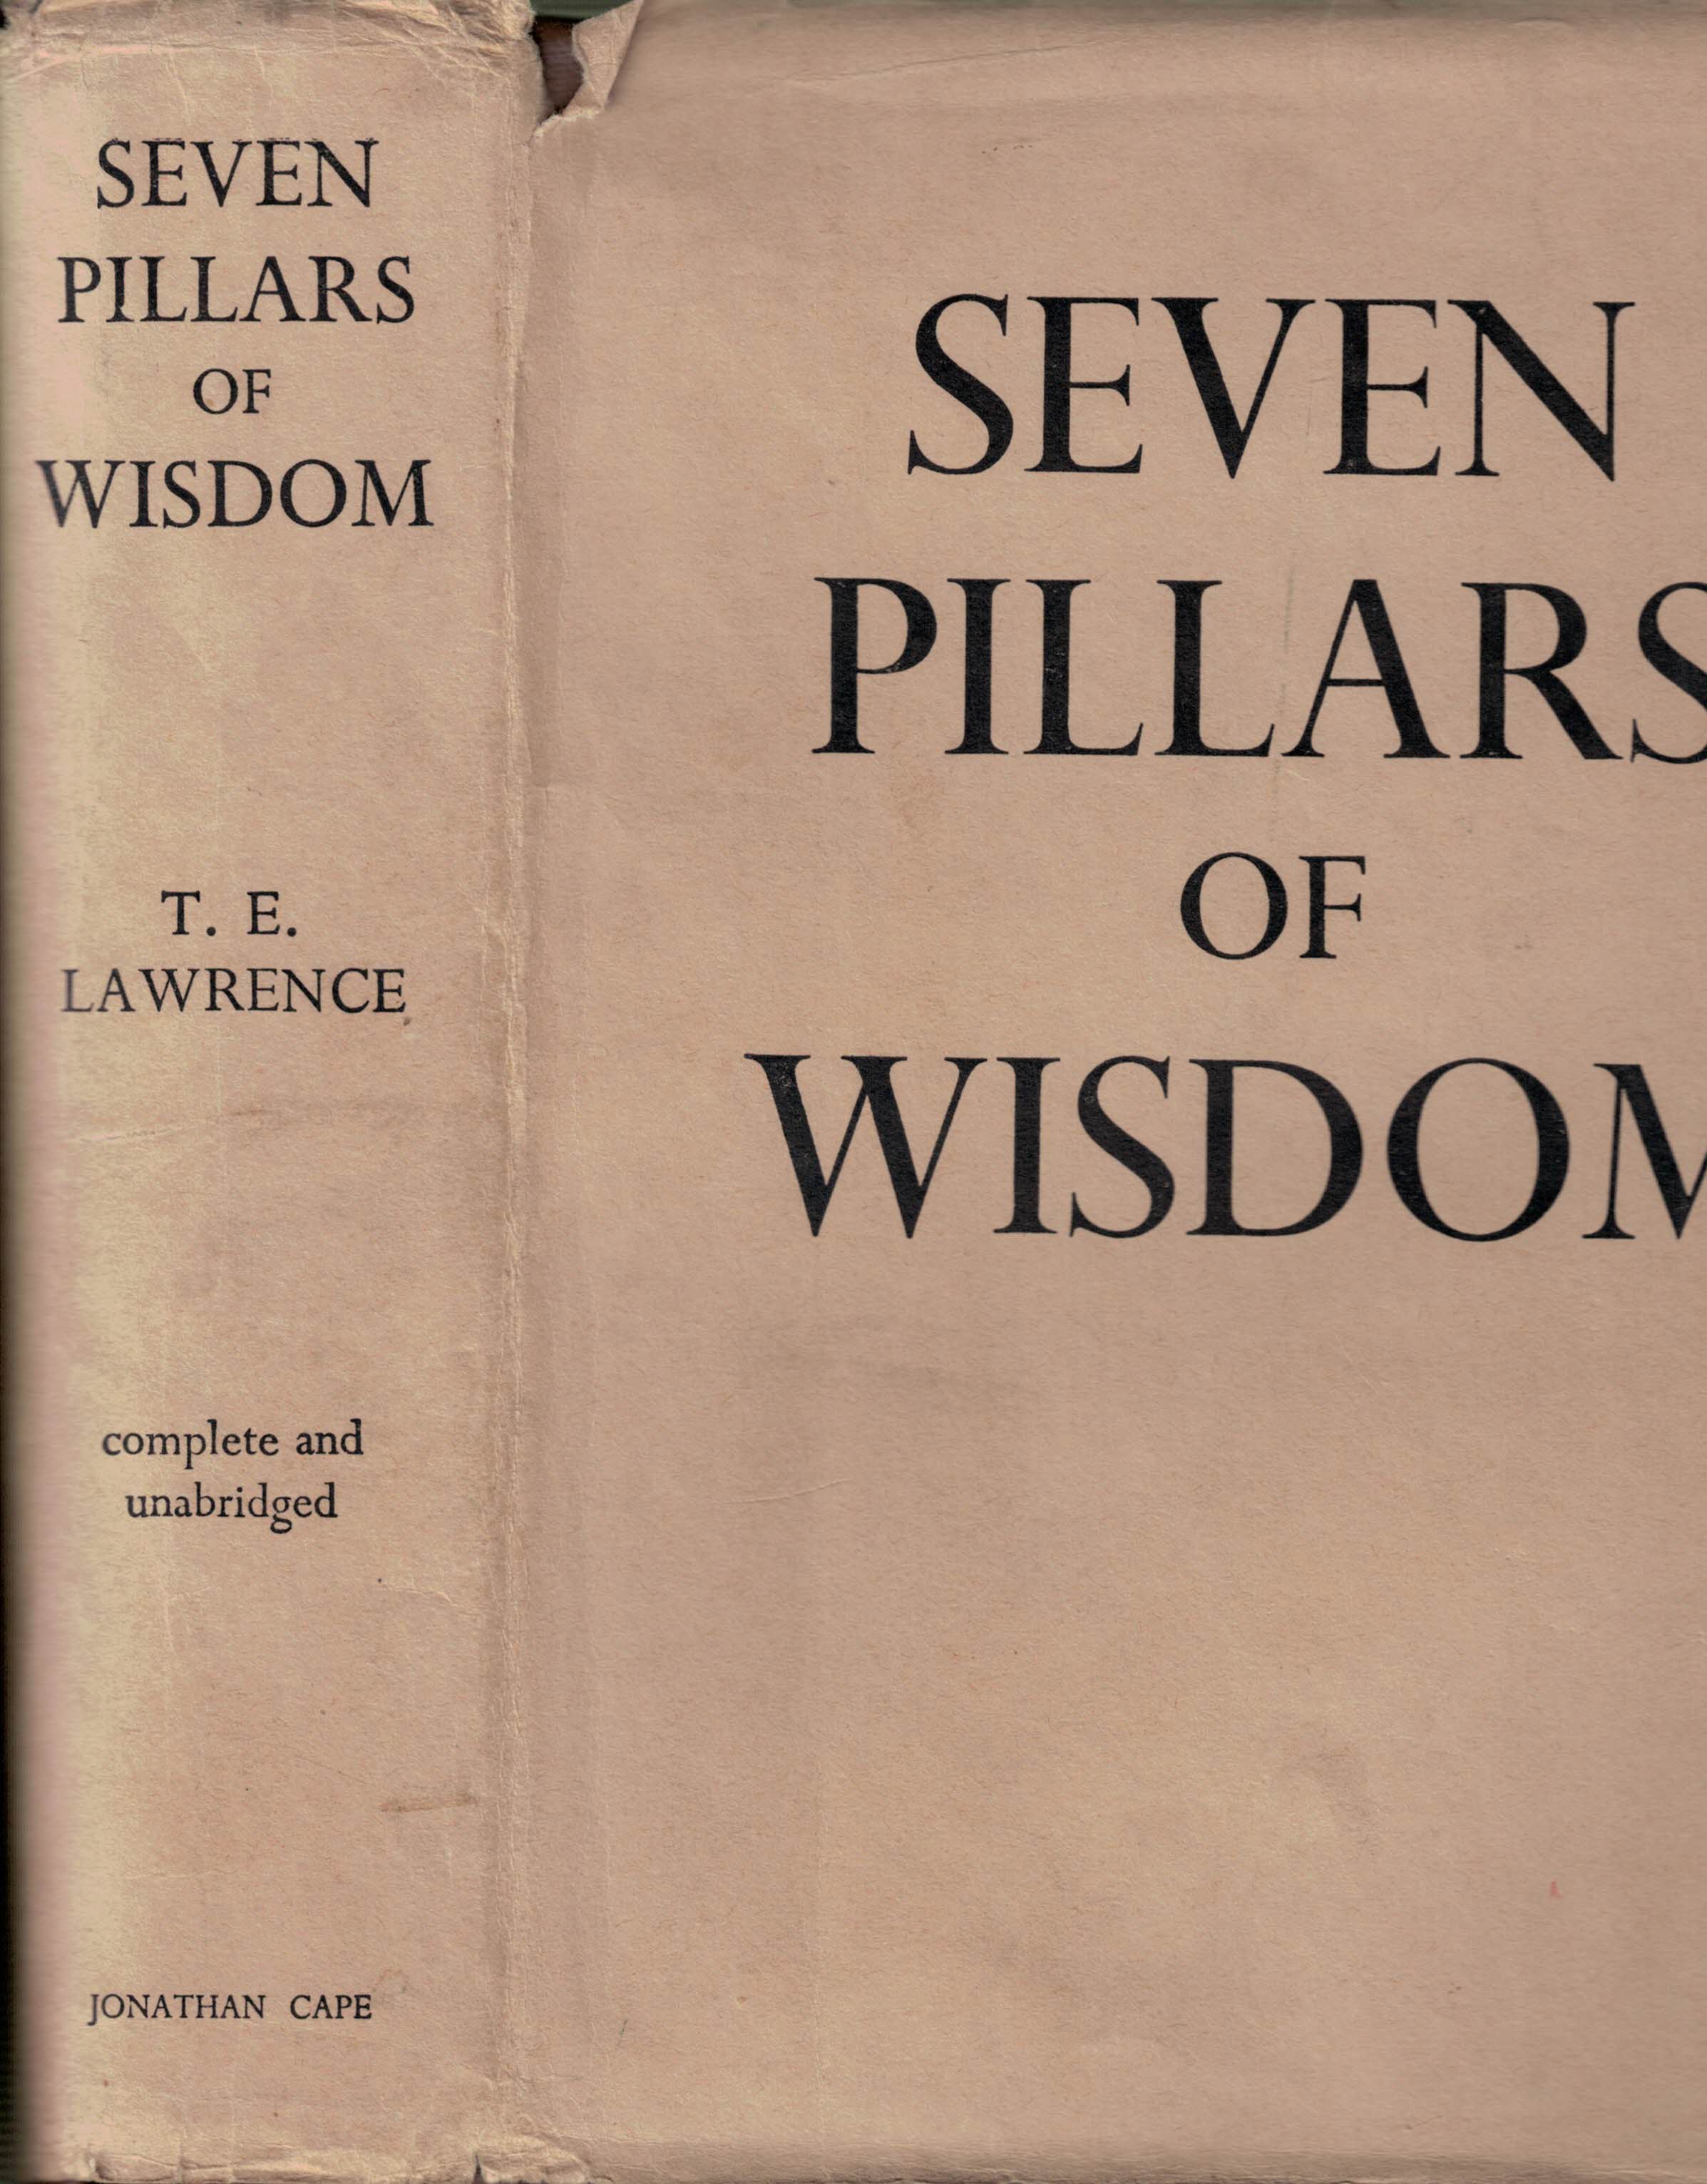 Seven Pillars of Wisdom. A Triumph. 1938.